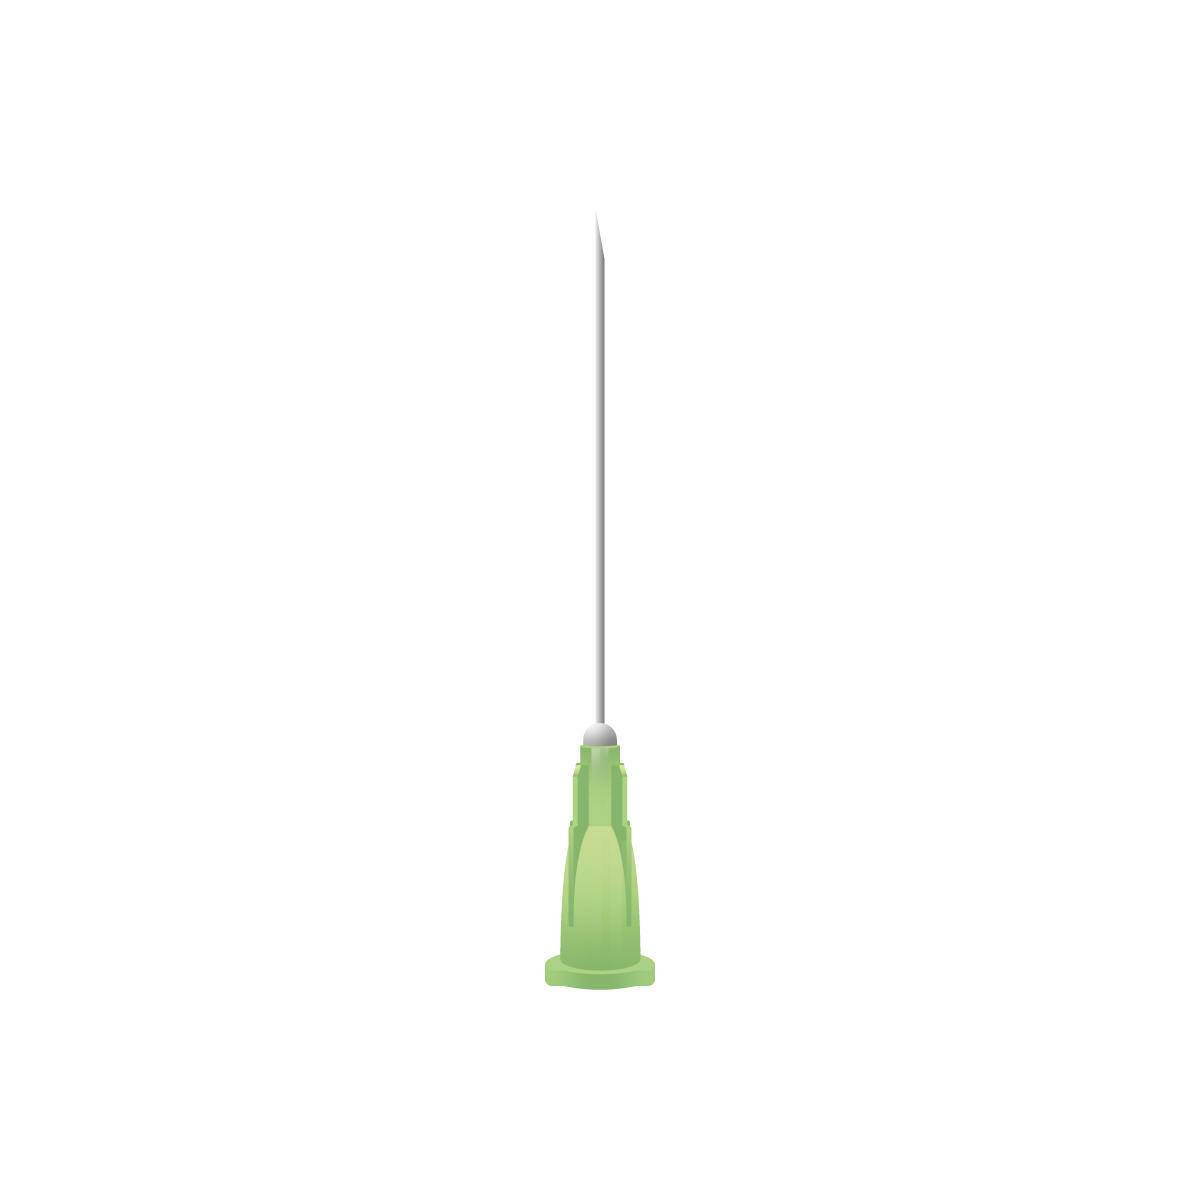 21g Green 1.5 inch BD Microlance Needles - UKMEDI